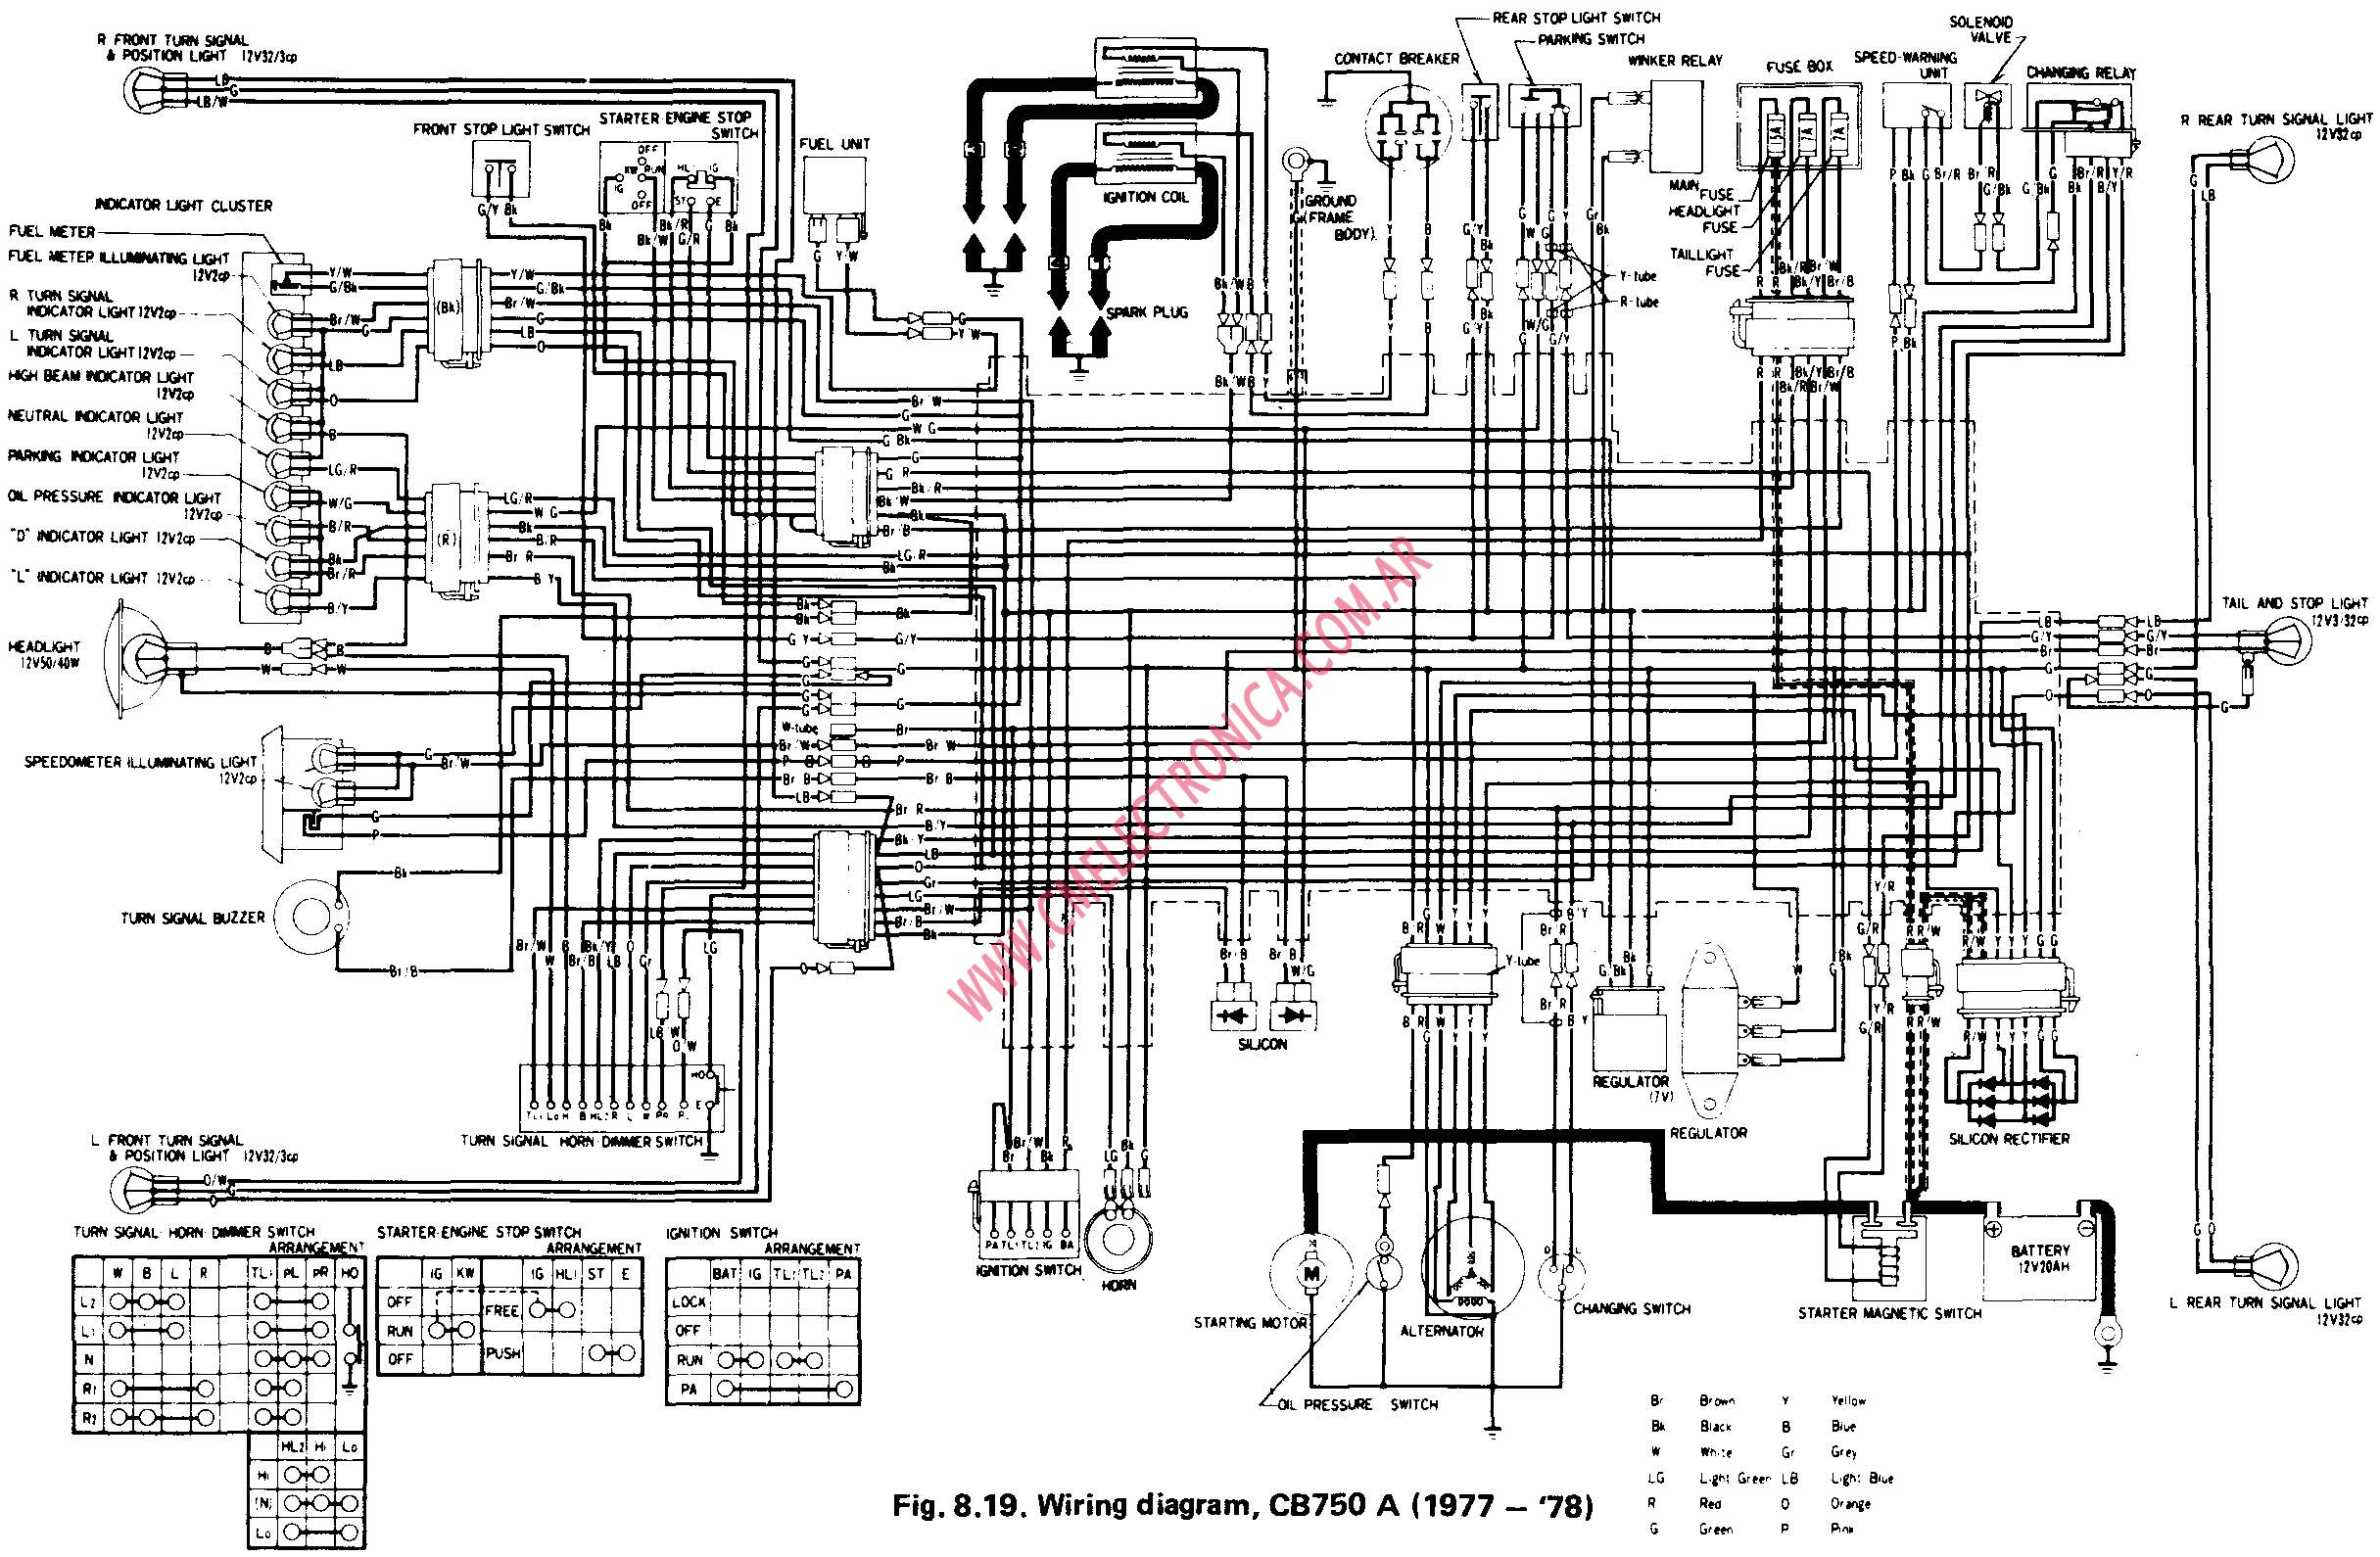 Diagram Honda Cb750a Wiring Diagram Full Version Hd Quality Wiring Diagram Moondiagrams Skytg24news It